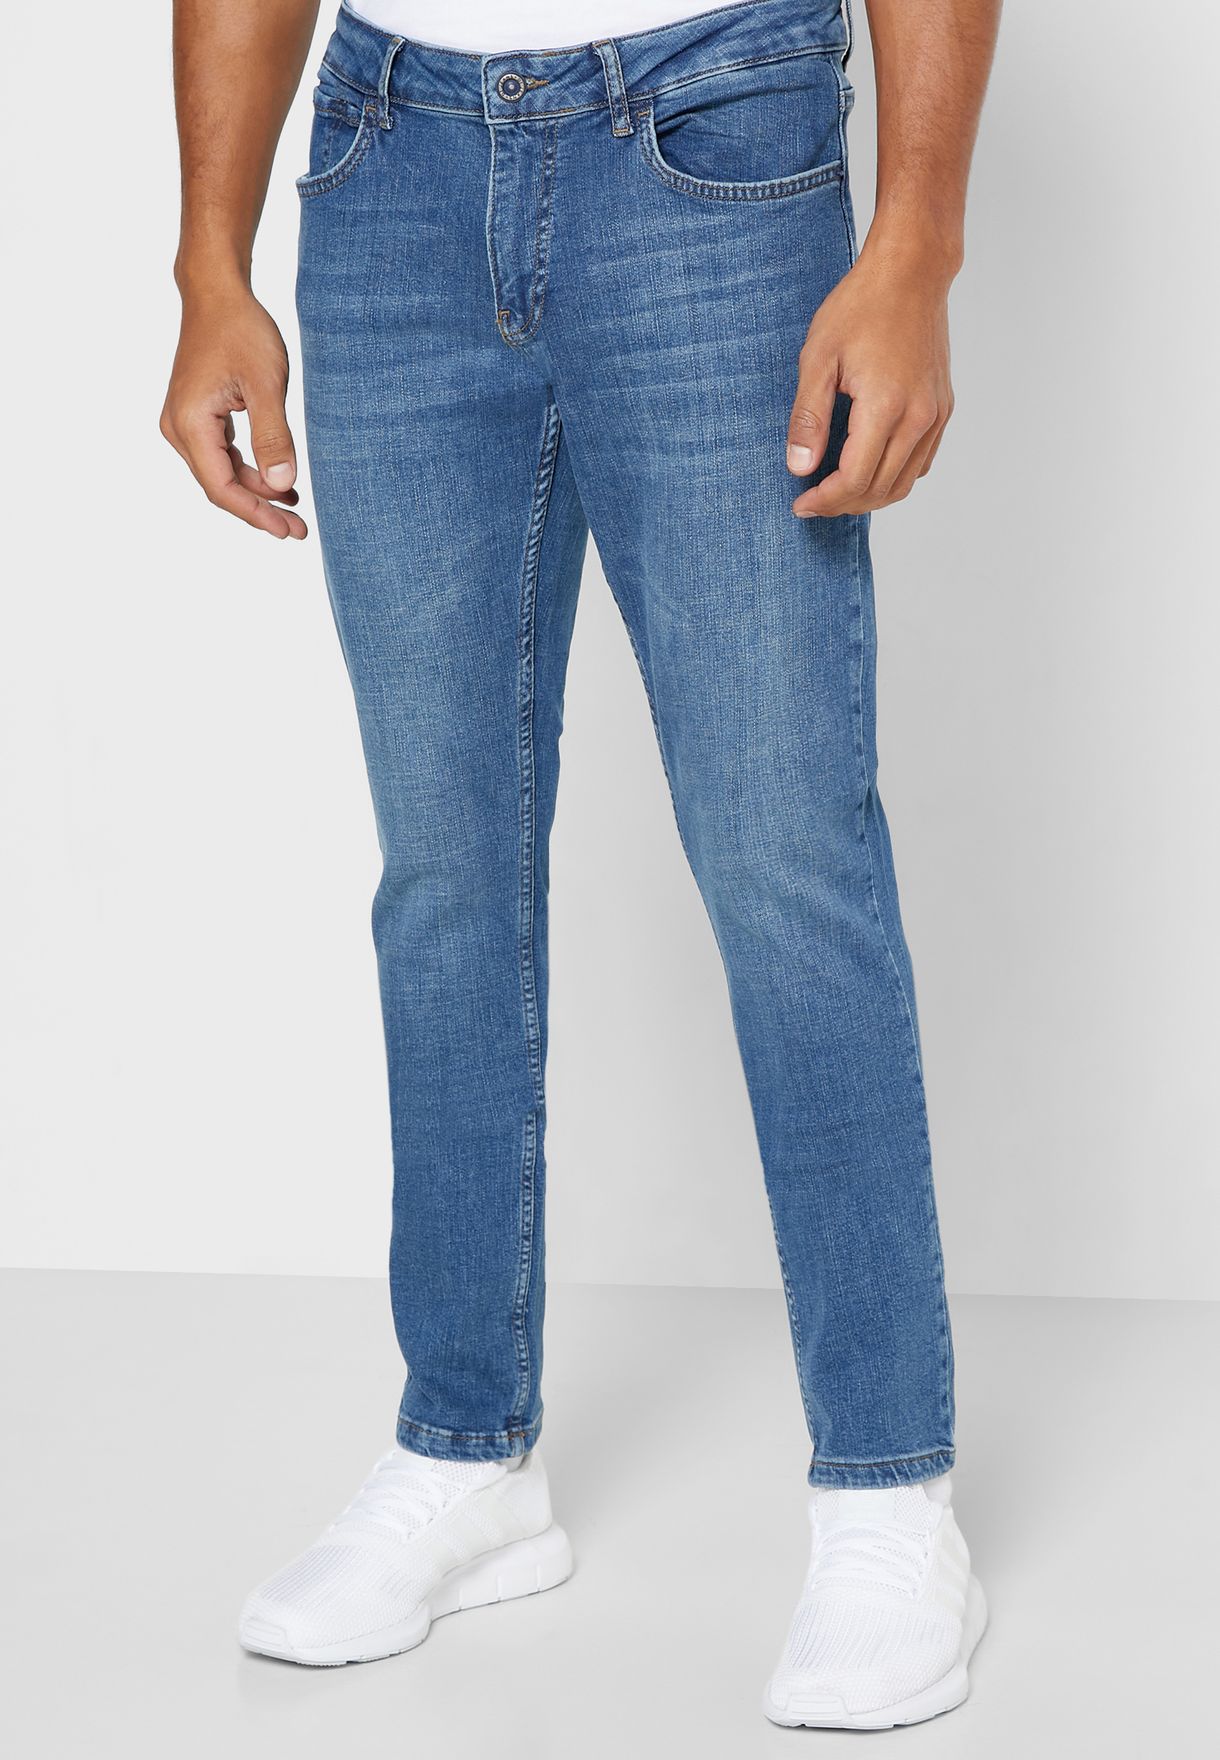 carlo jeans